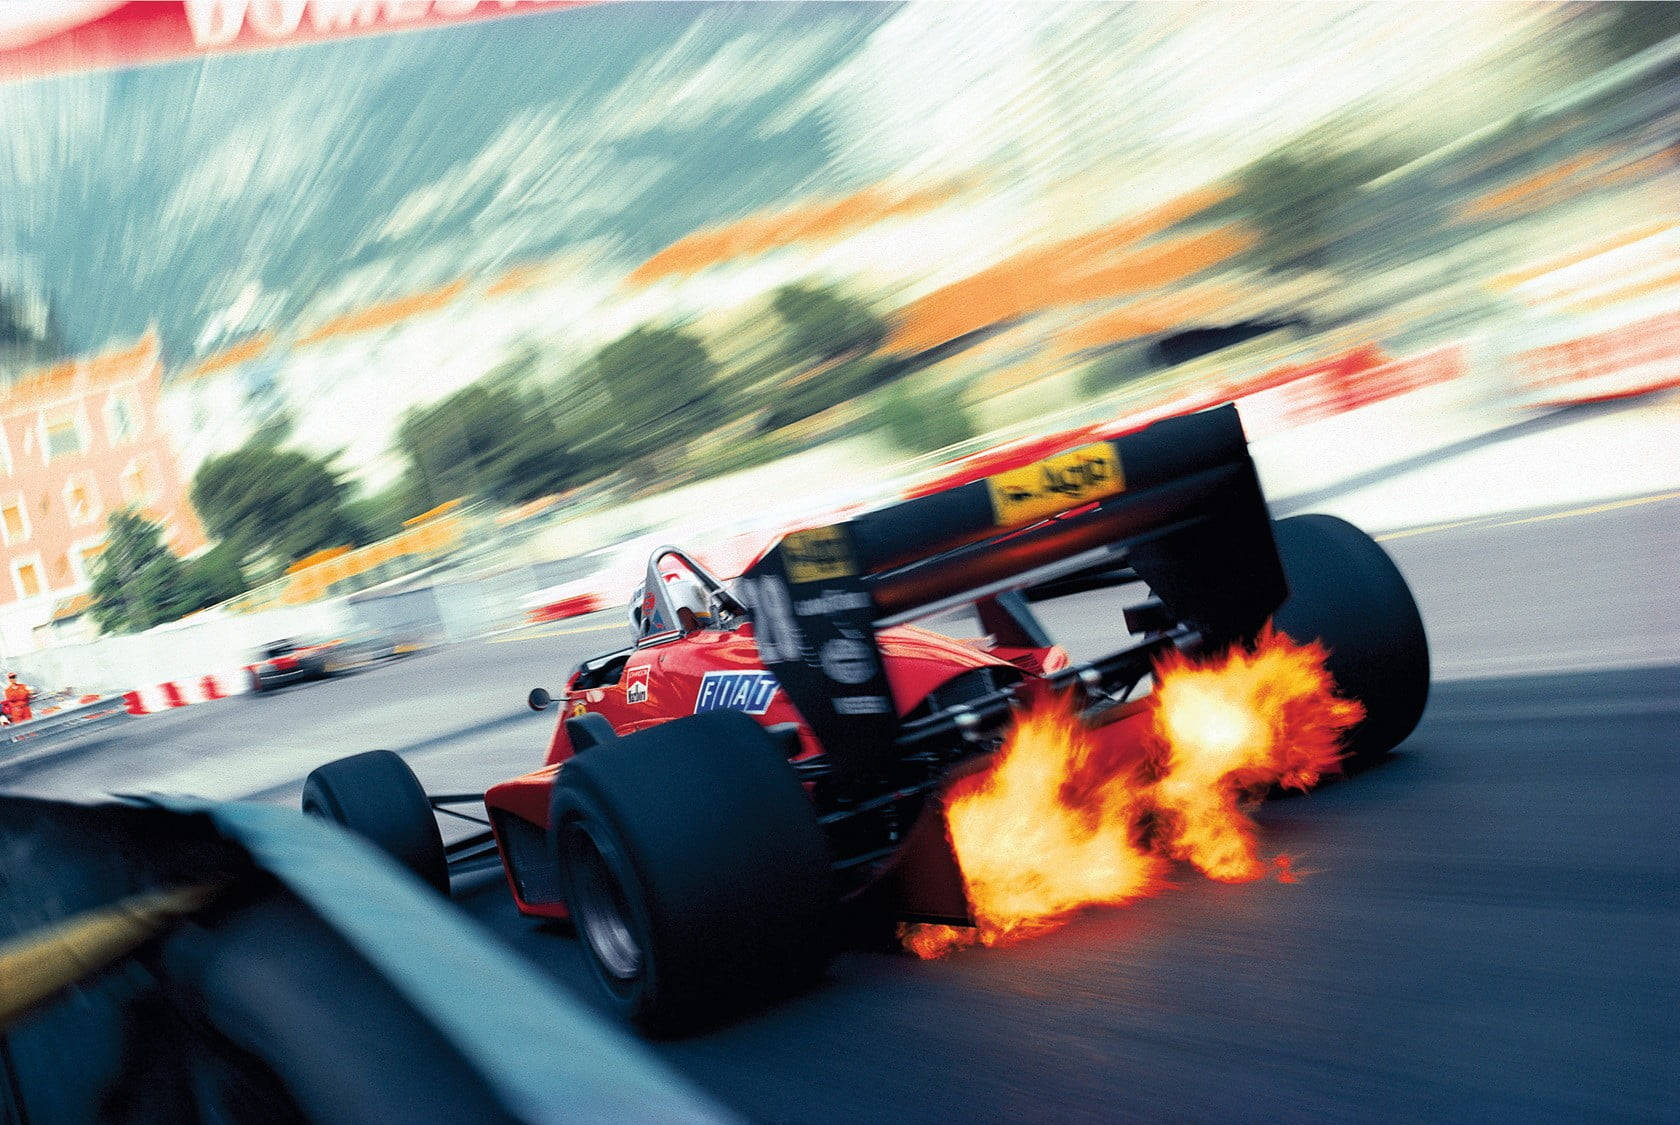 Blurred Photo Of Formula One Fire Car